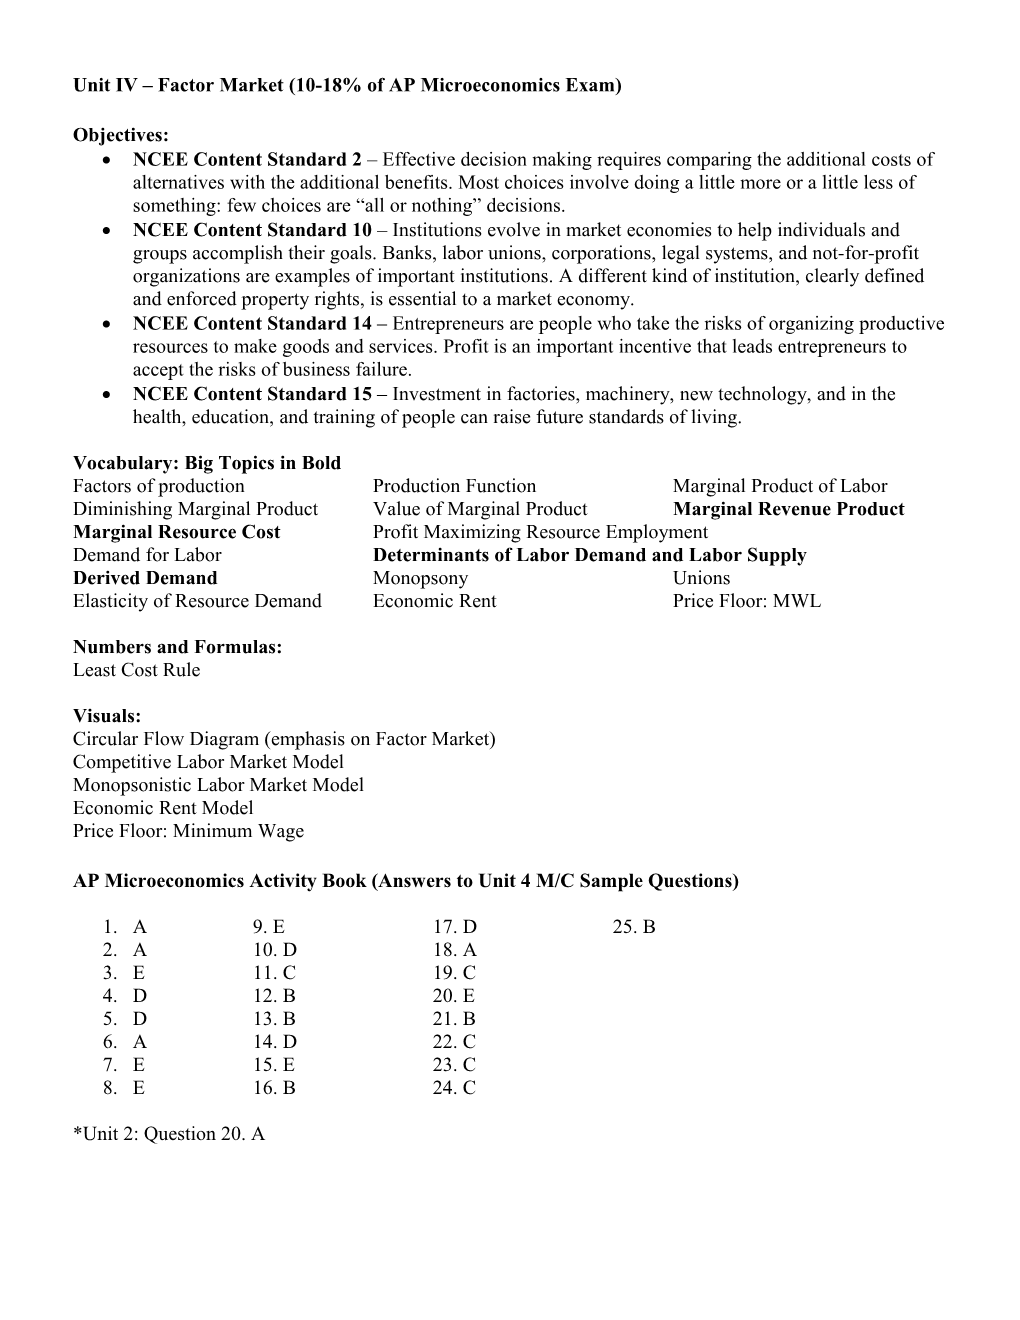 Unit IV Factor Market (10-18% of AP Microeconomics Exam)